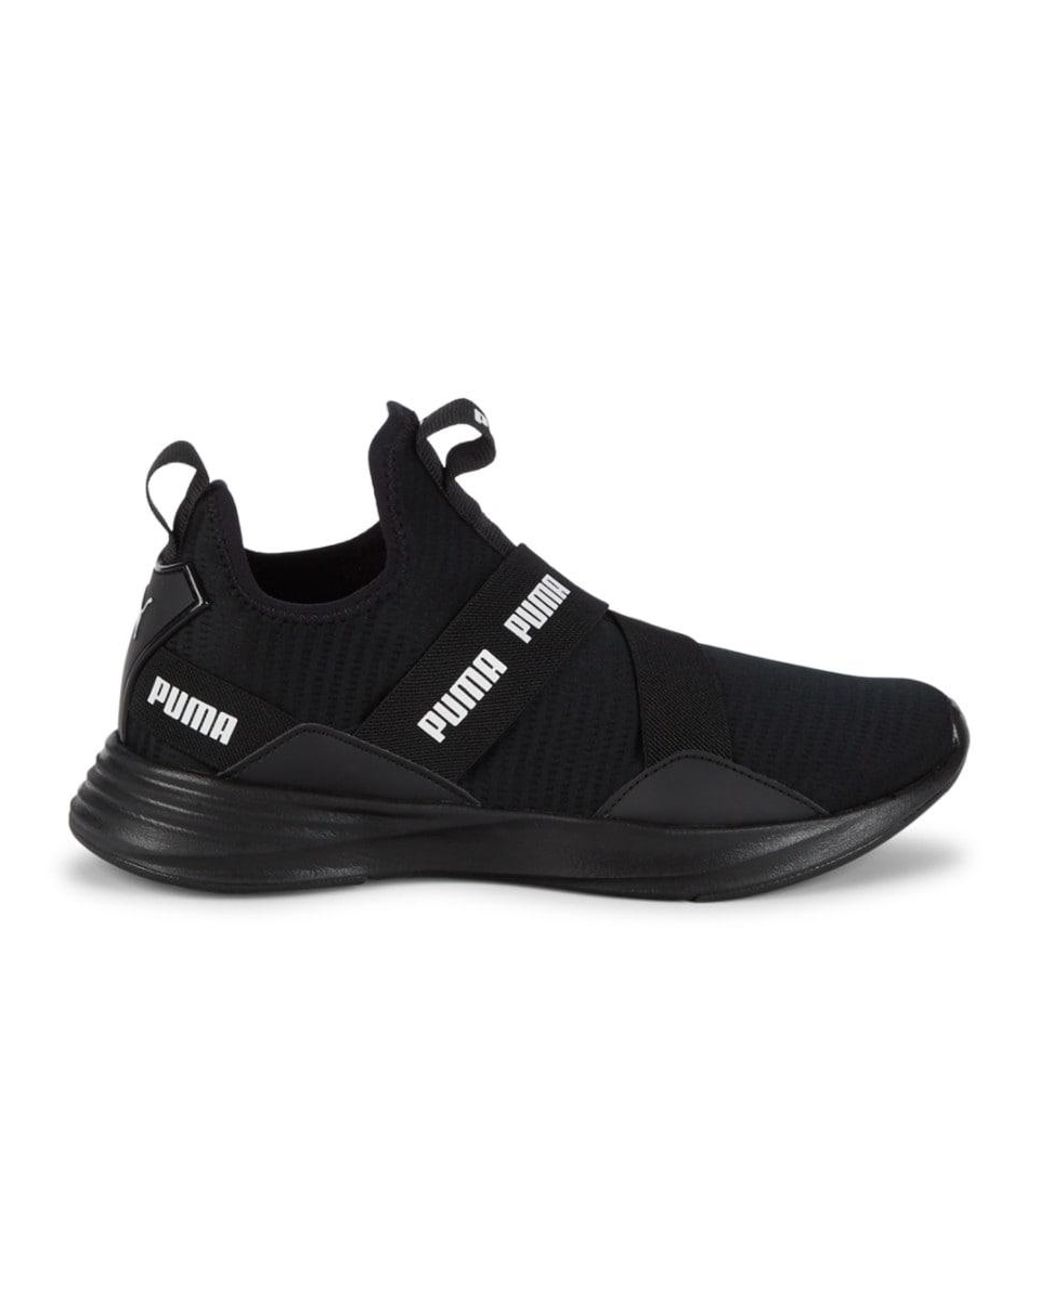 PUMA Synthetic Women's Radiate Mid Slip-on Sneakers - Black - Size 6.5 ...